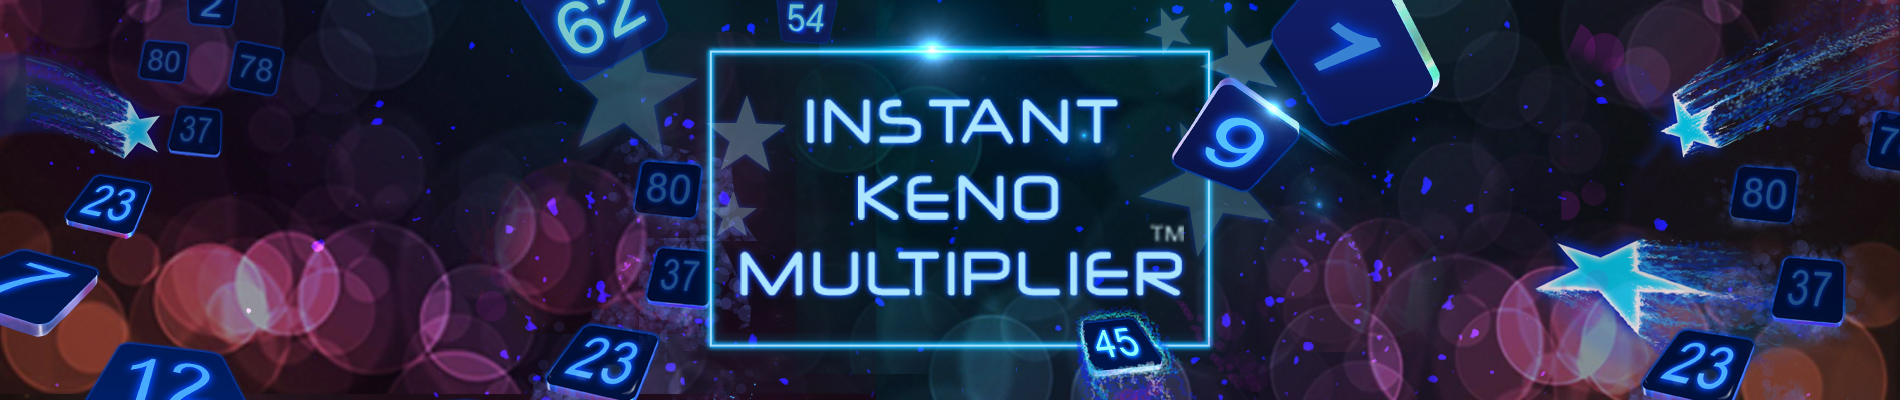 Instant Keno Multiplier Sportingbet